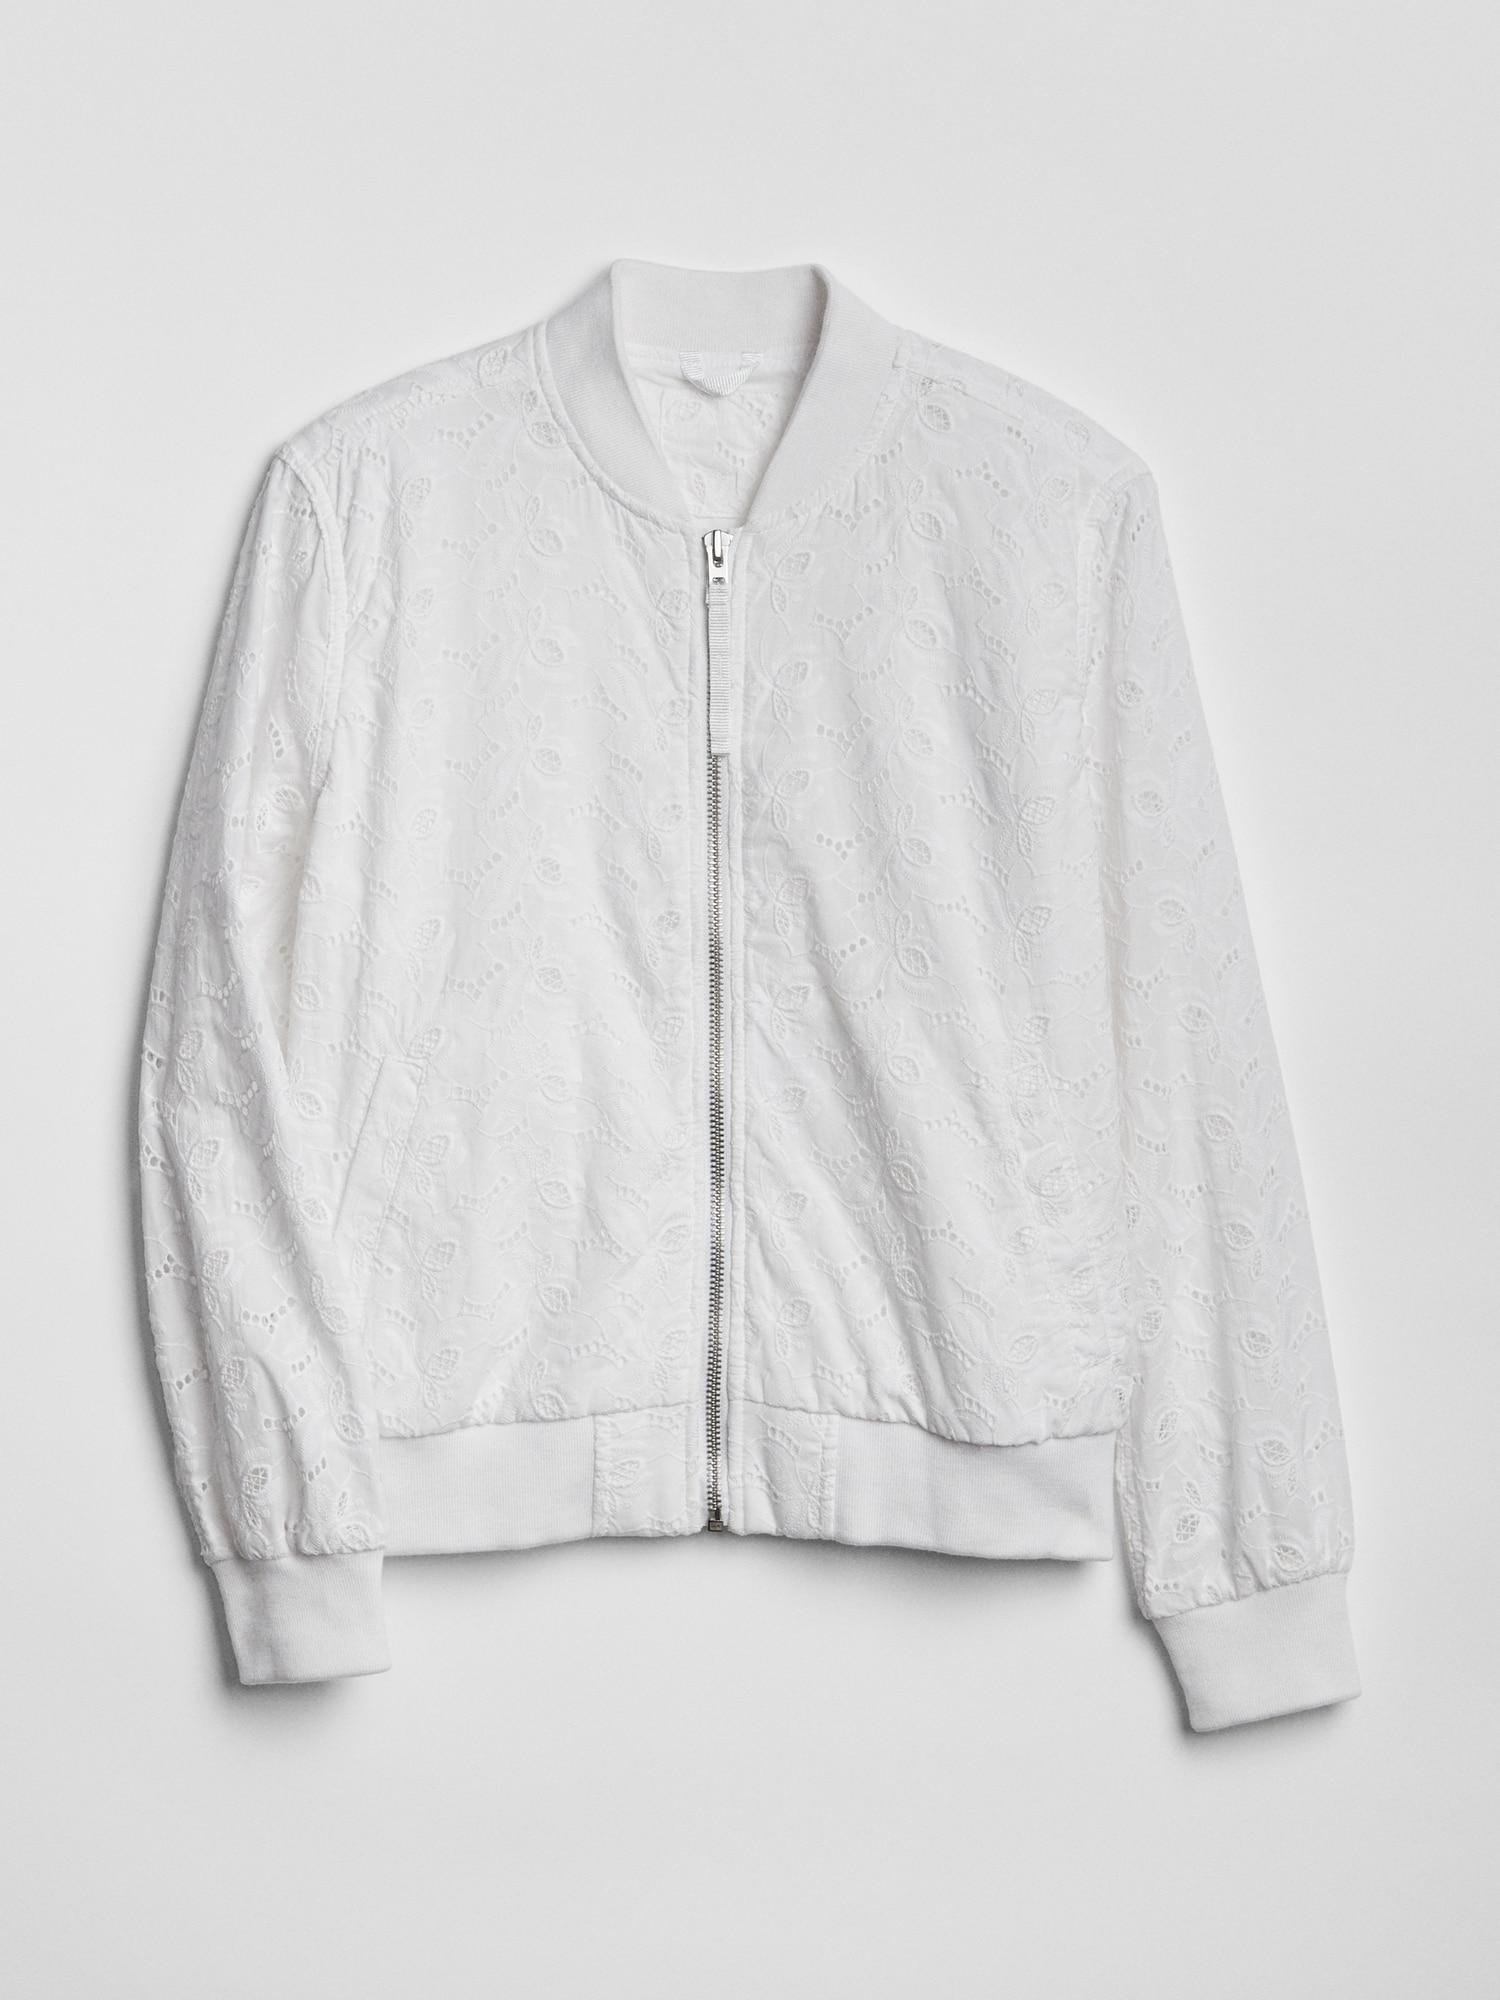 white gap jacket